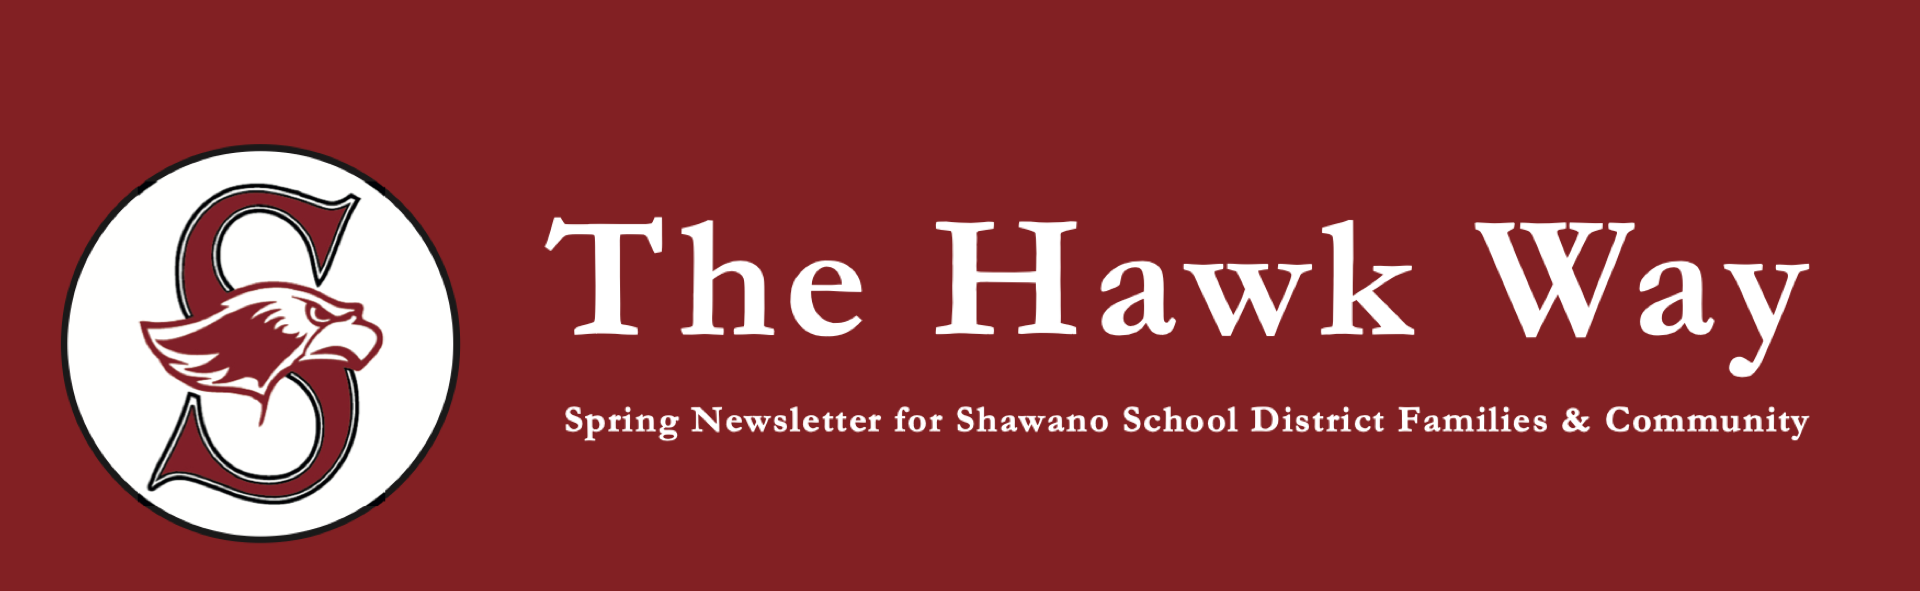 The Hawk Way Newsletters